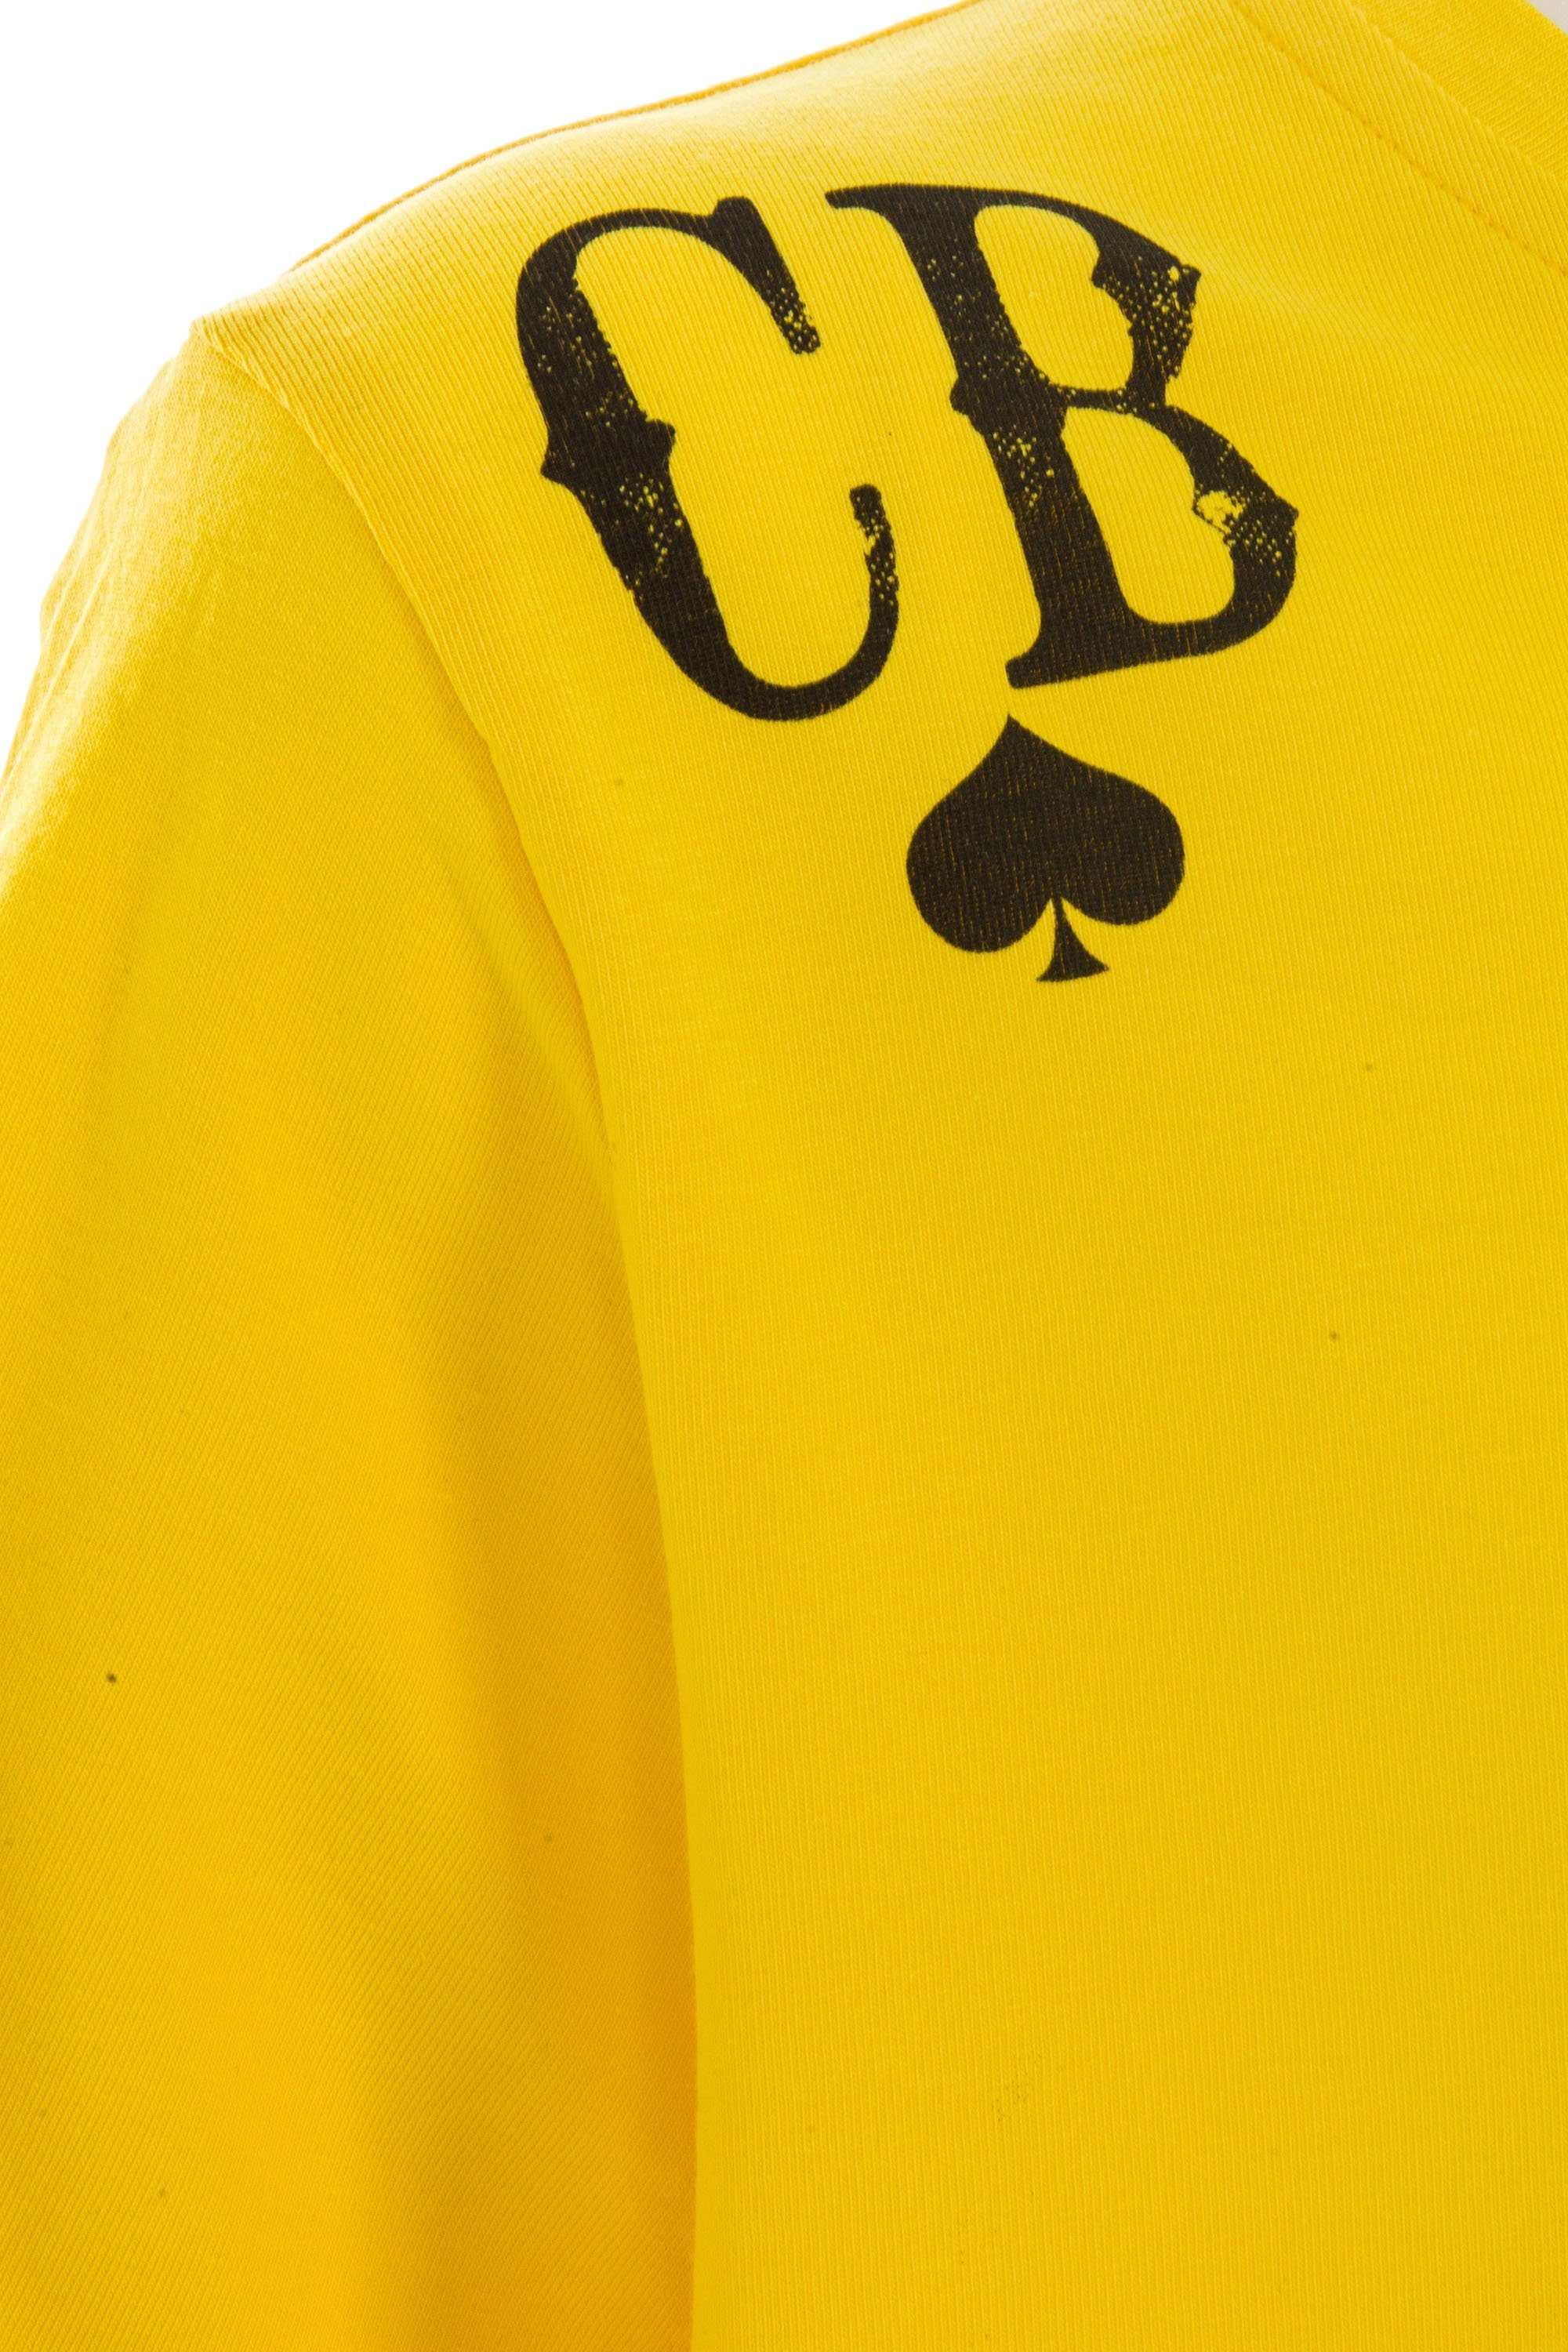 Cipo & Baxx coolem gelb-schwarz mit T-Shirt Print